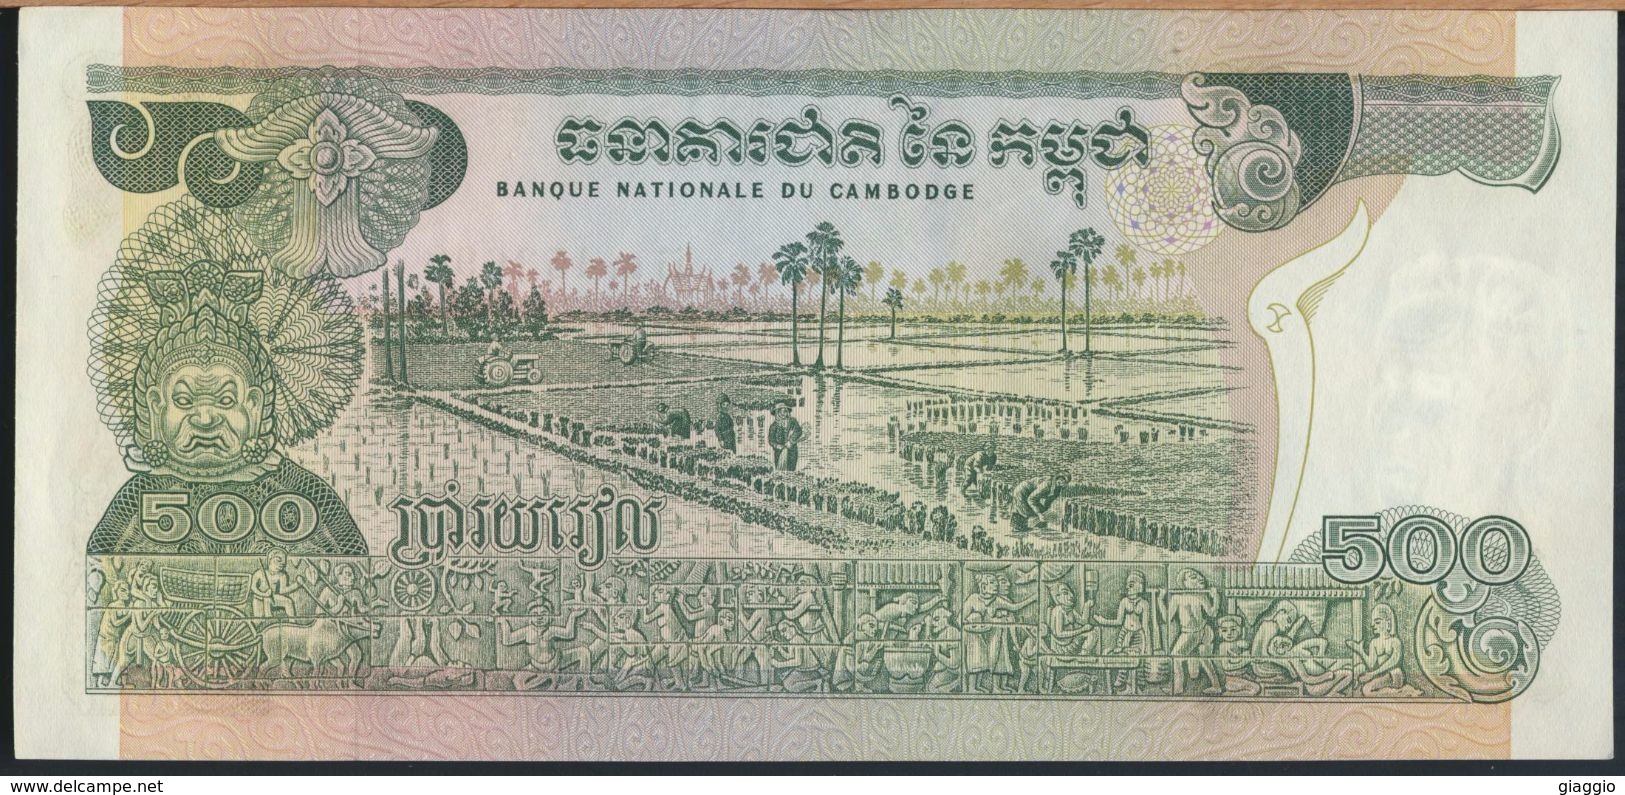 °°° CAMBOGIA CAMBODIA - 500 RIELS °°° - Cambogia